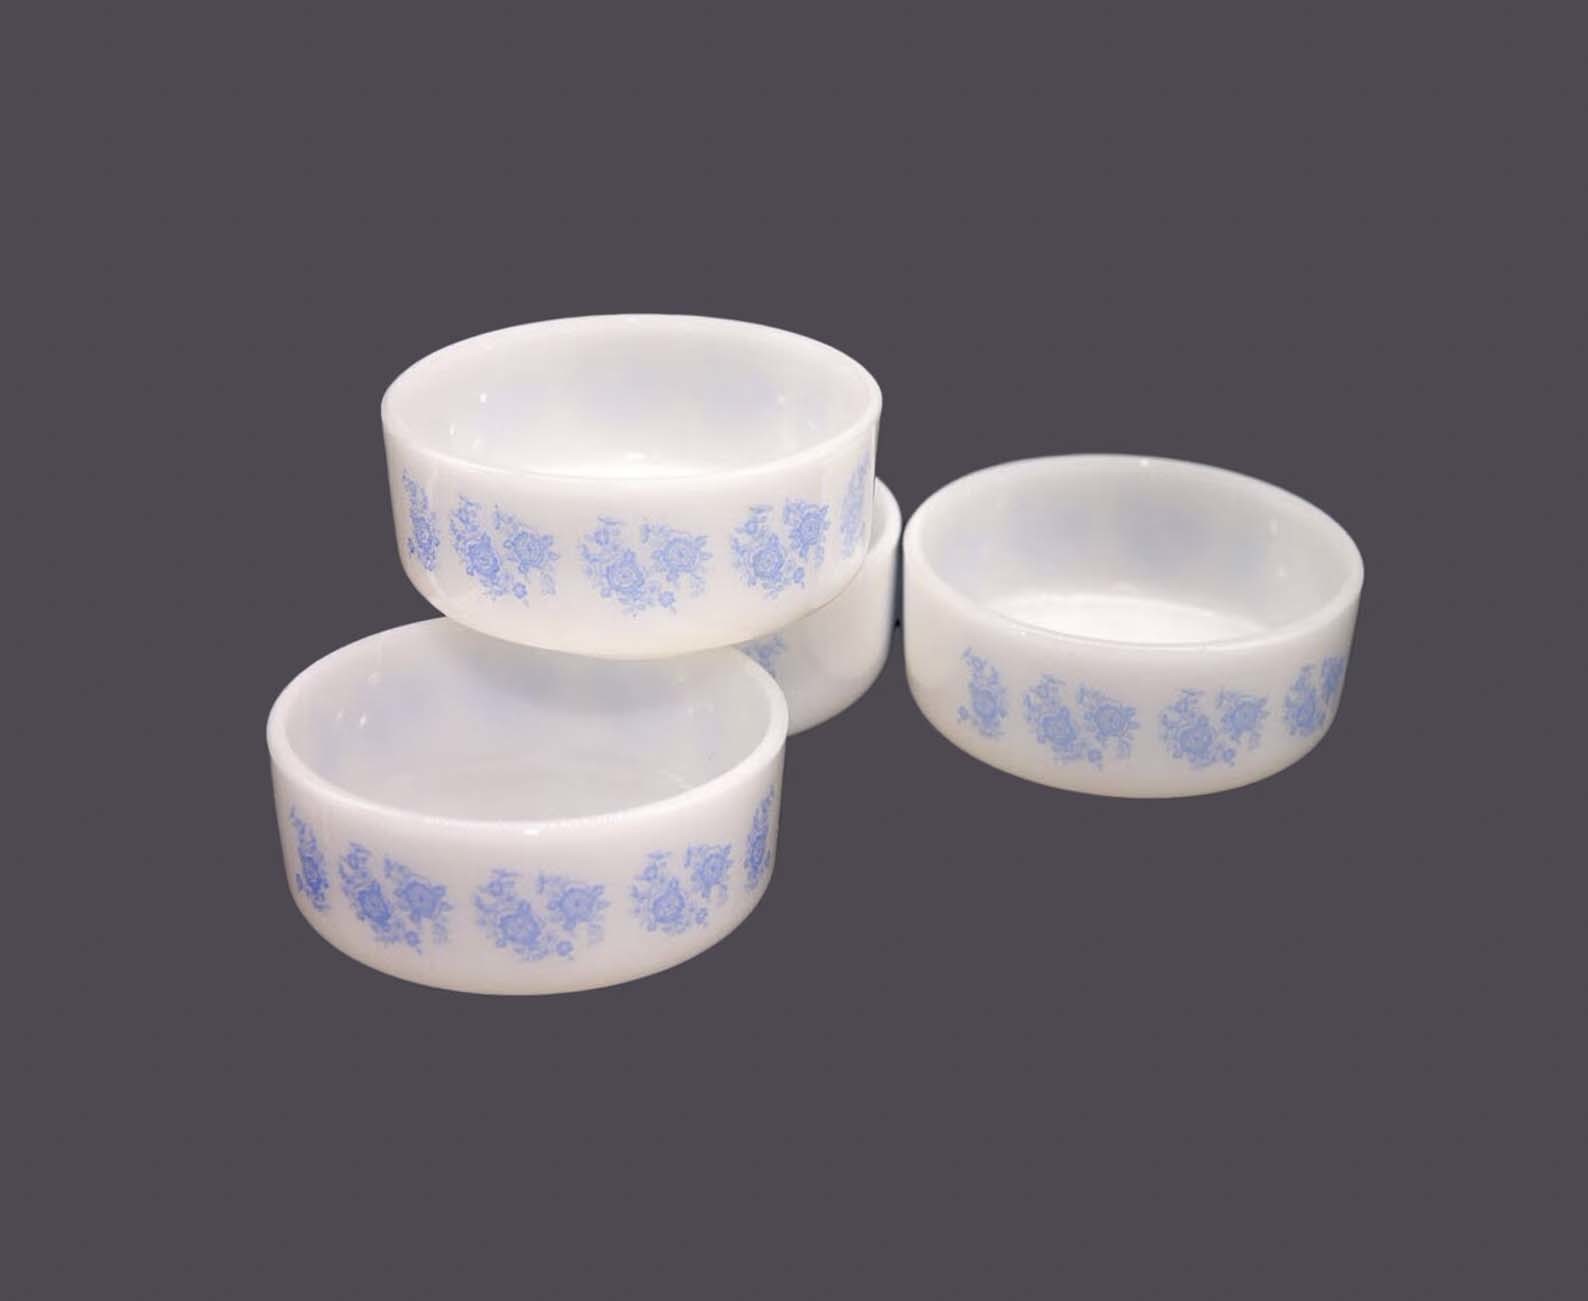 Federal Glass stackable milk glass dessert bowls made in USA. - $49.93 - $62.65